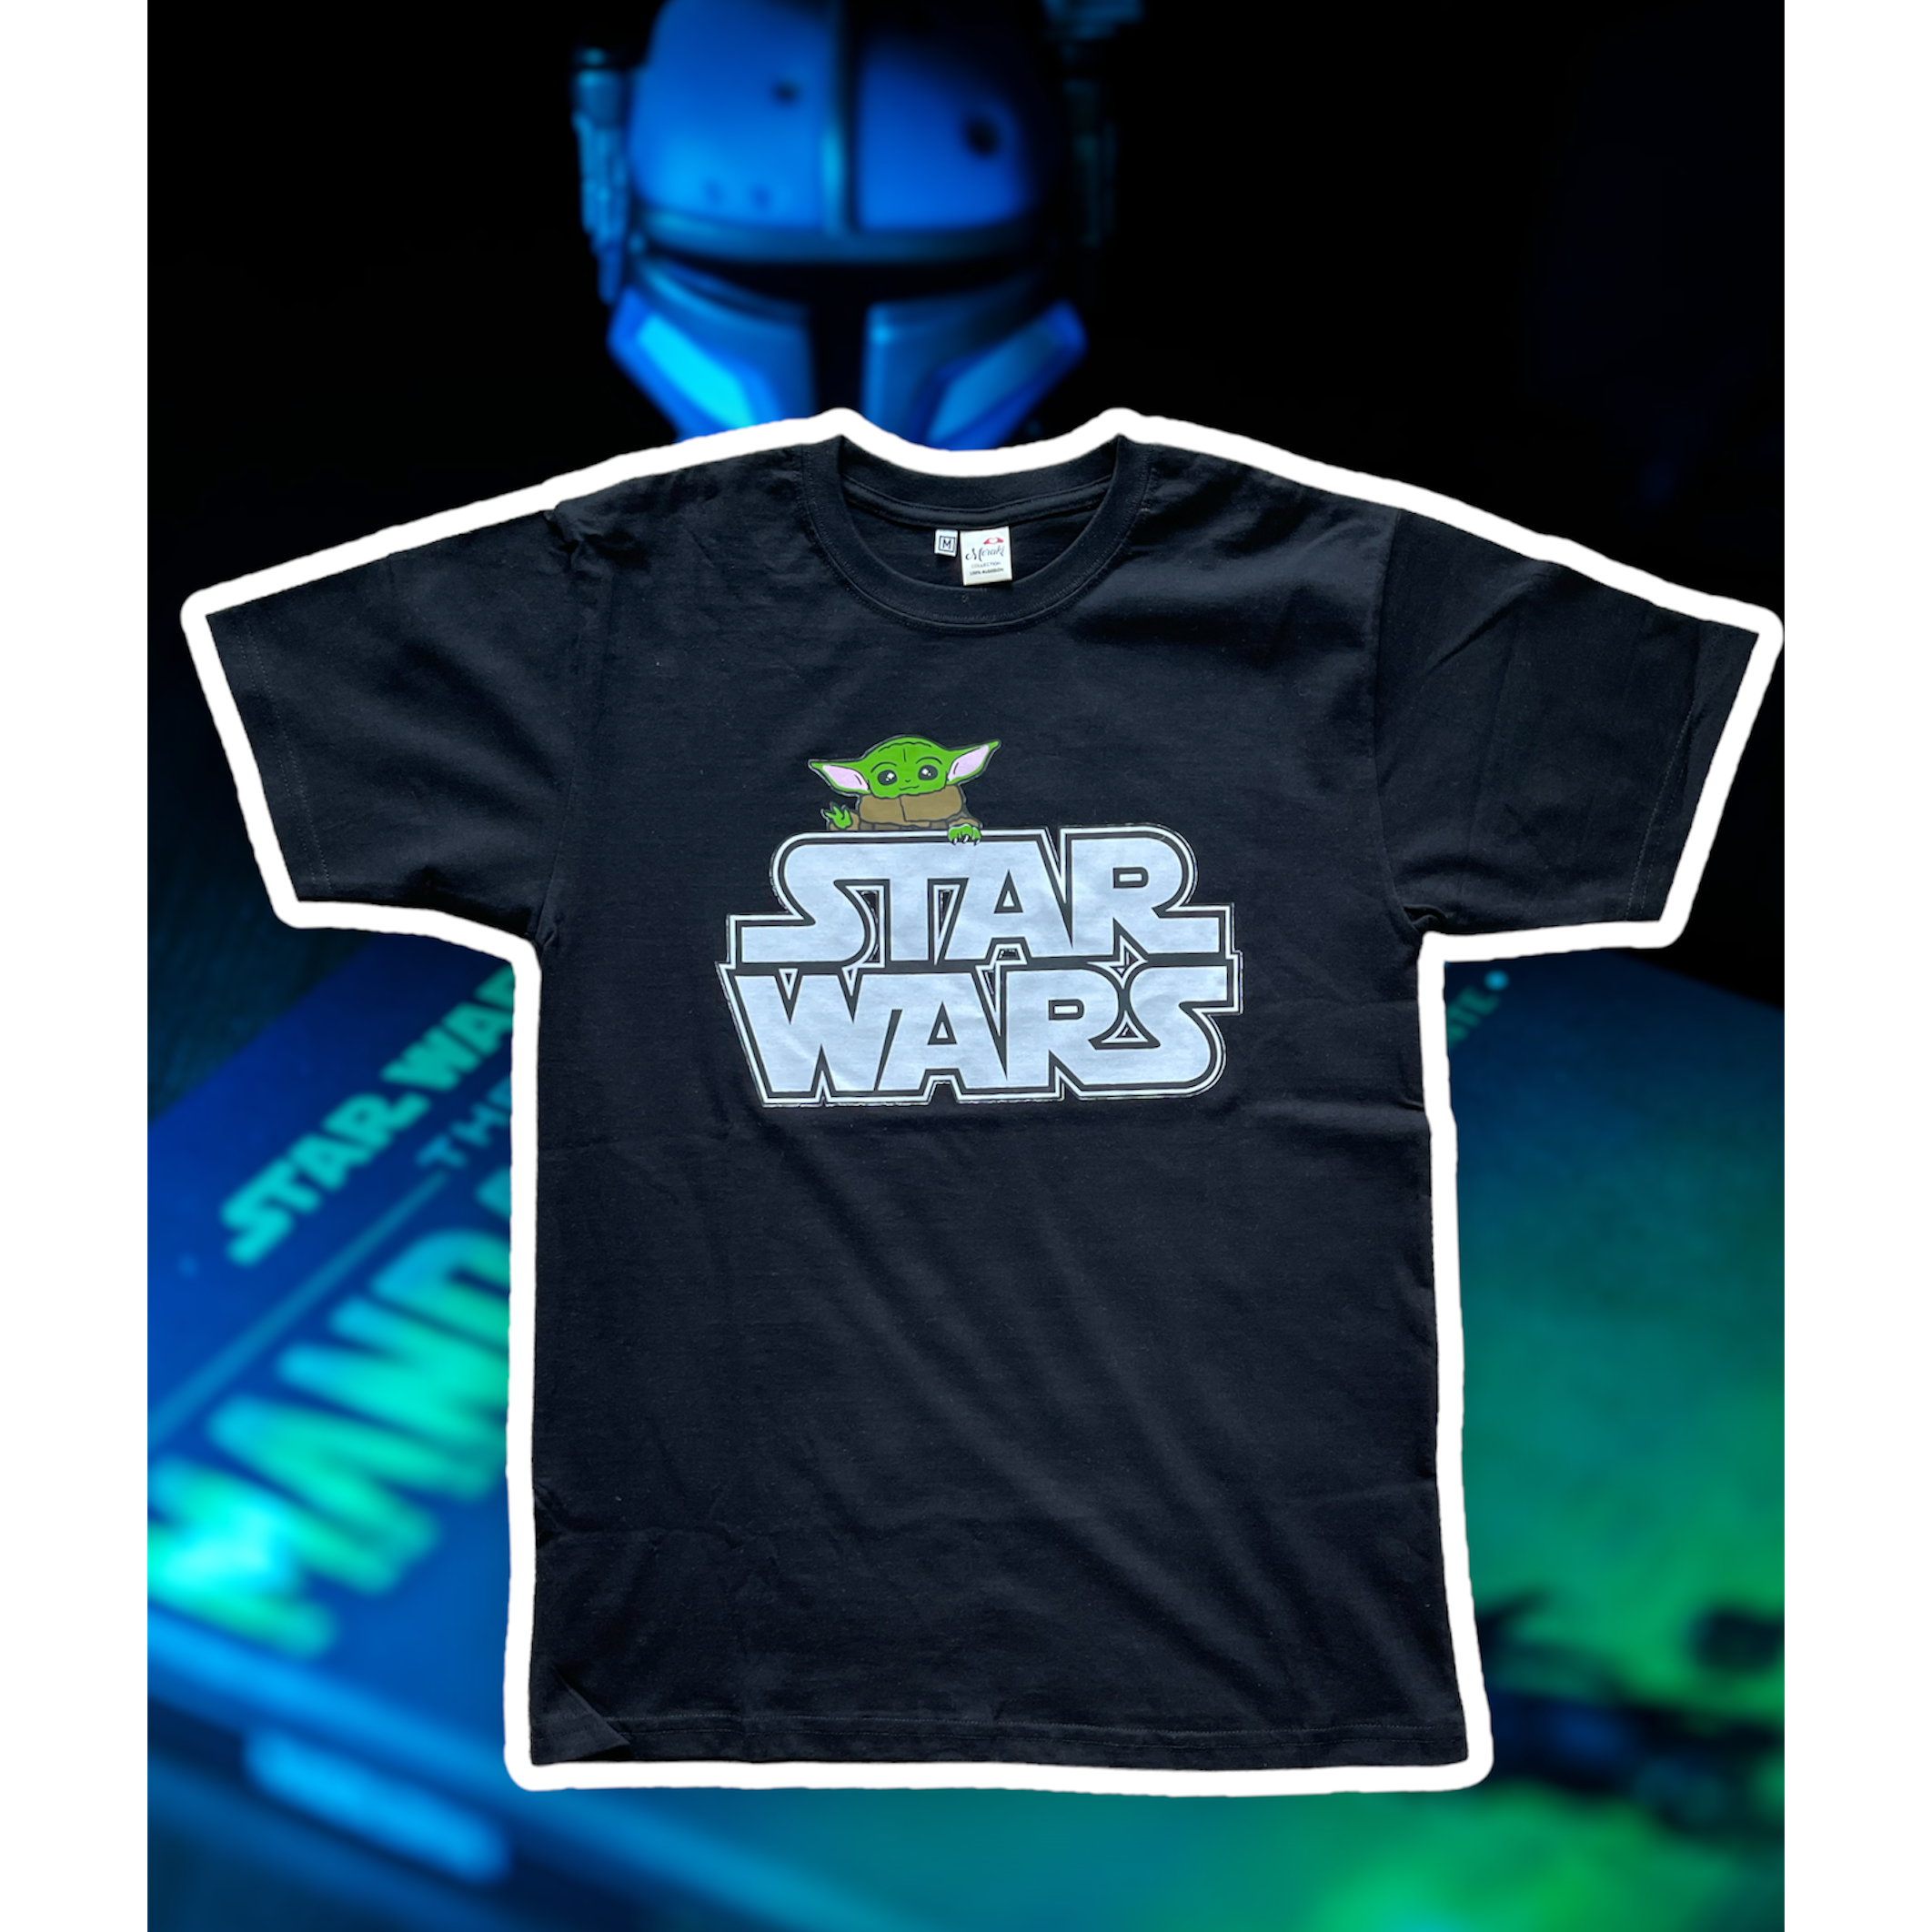 T-shirt modelo Star Wars talla M